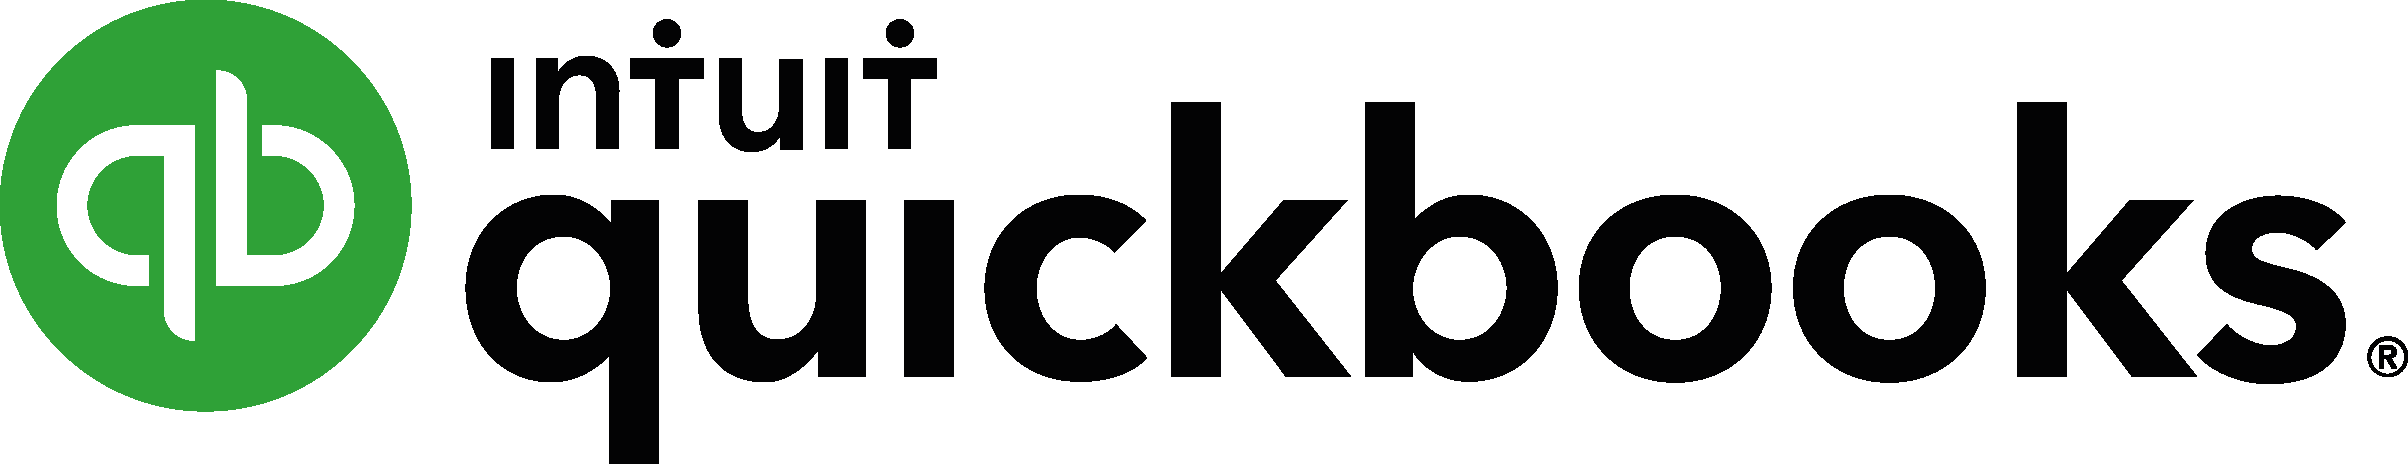 quickbooks logo trusted partner mileage tracker app